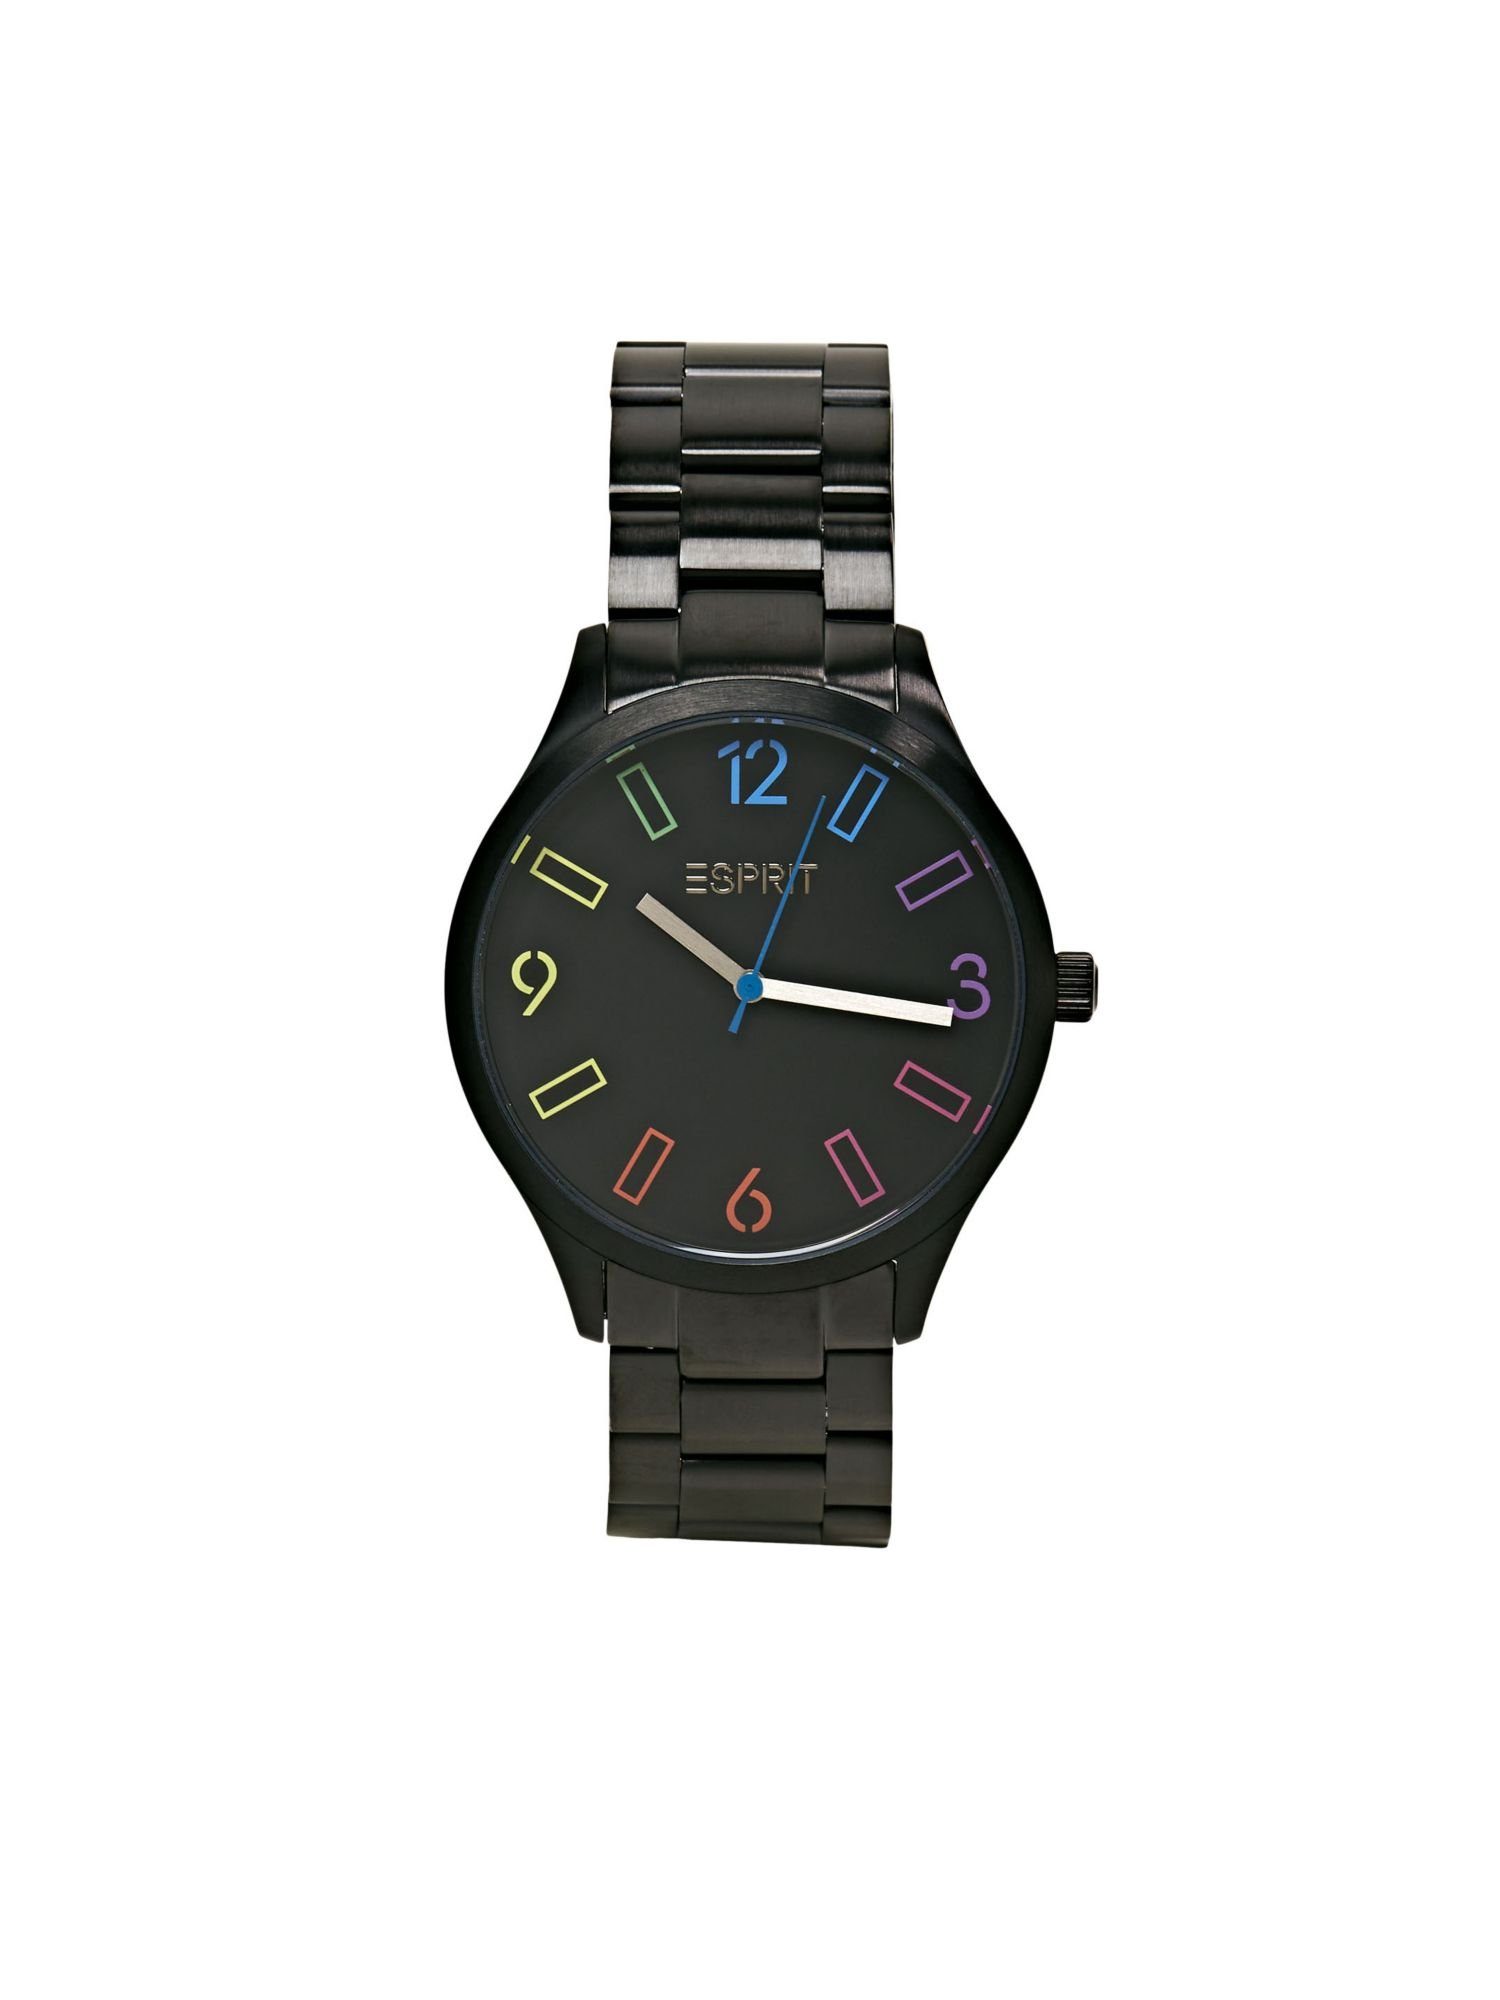 mit Quarzuhr Esprit mehrfarbigem Edelstahl-Armbanduhr Ziffernblatt